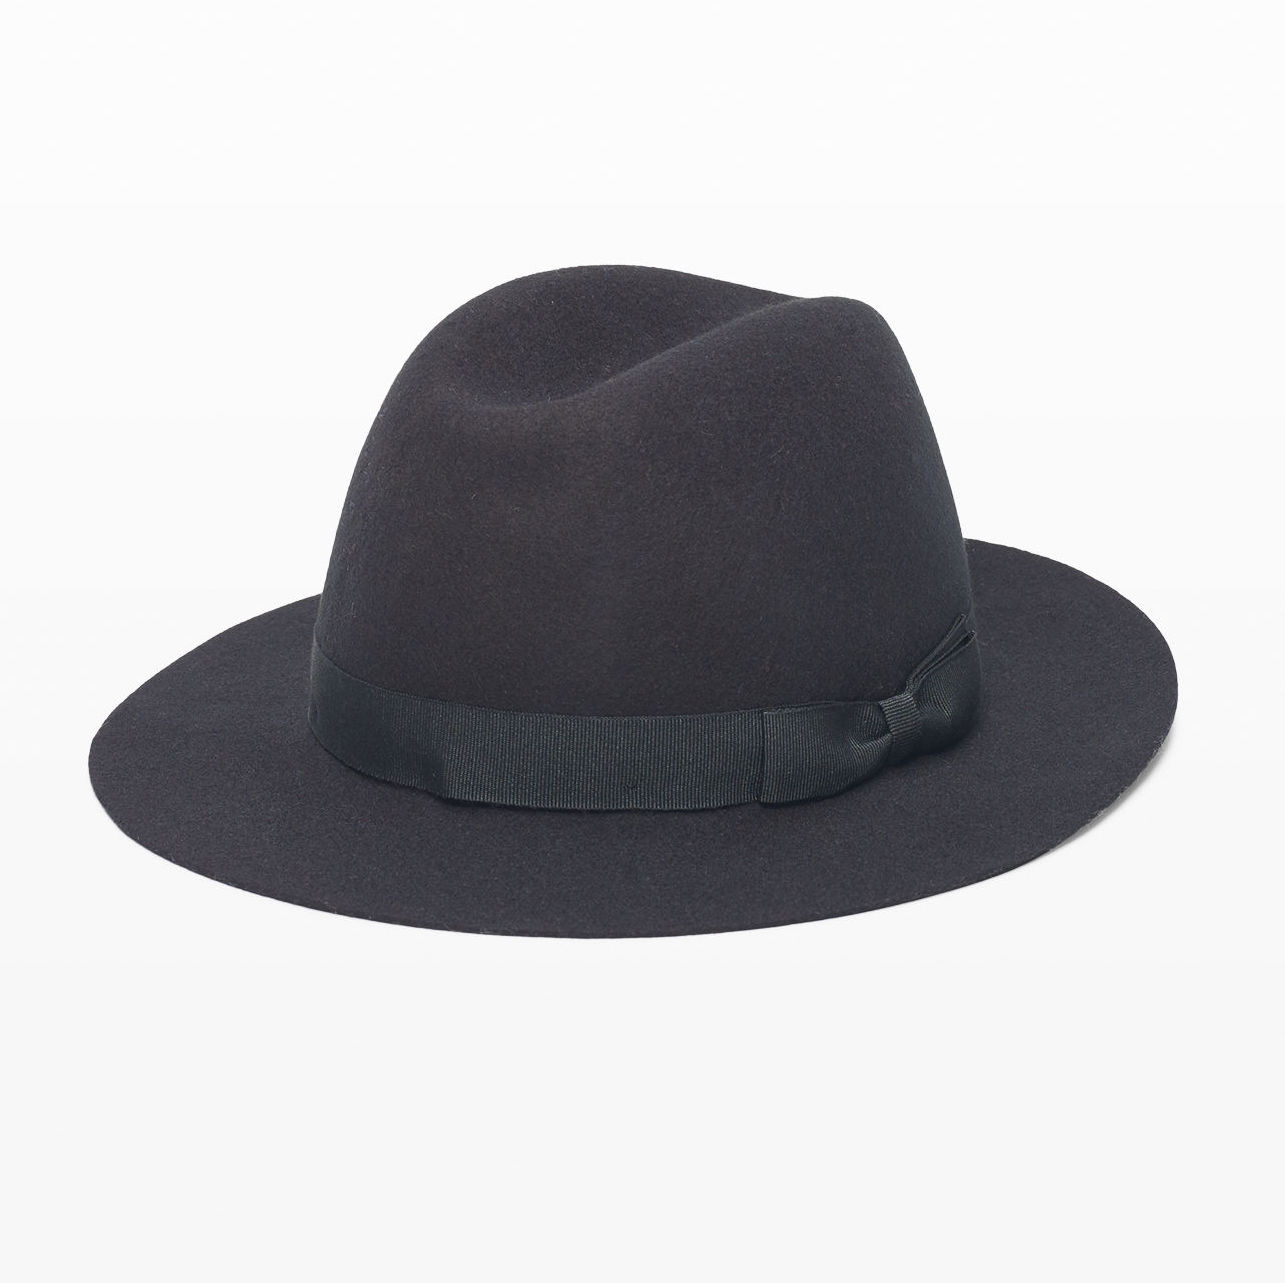 Fashion Jobs - Men’s Fashion: Brimmed hats for the summer - Fashion ...